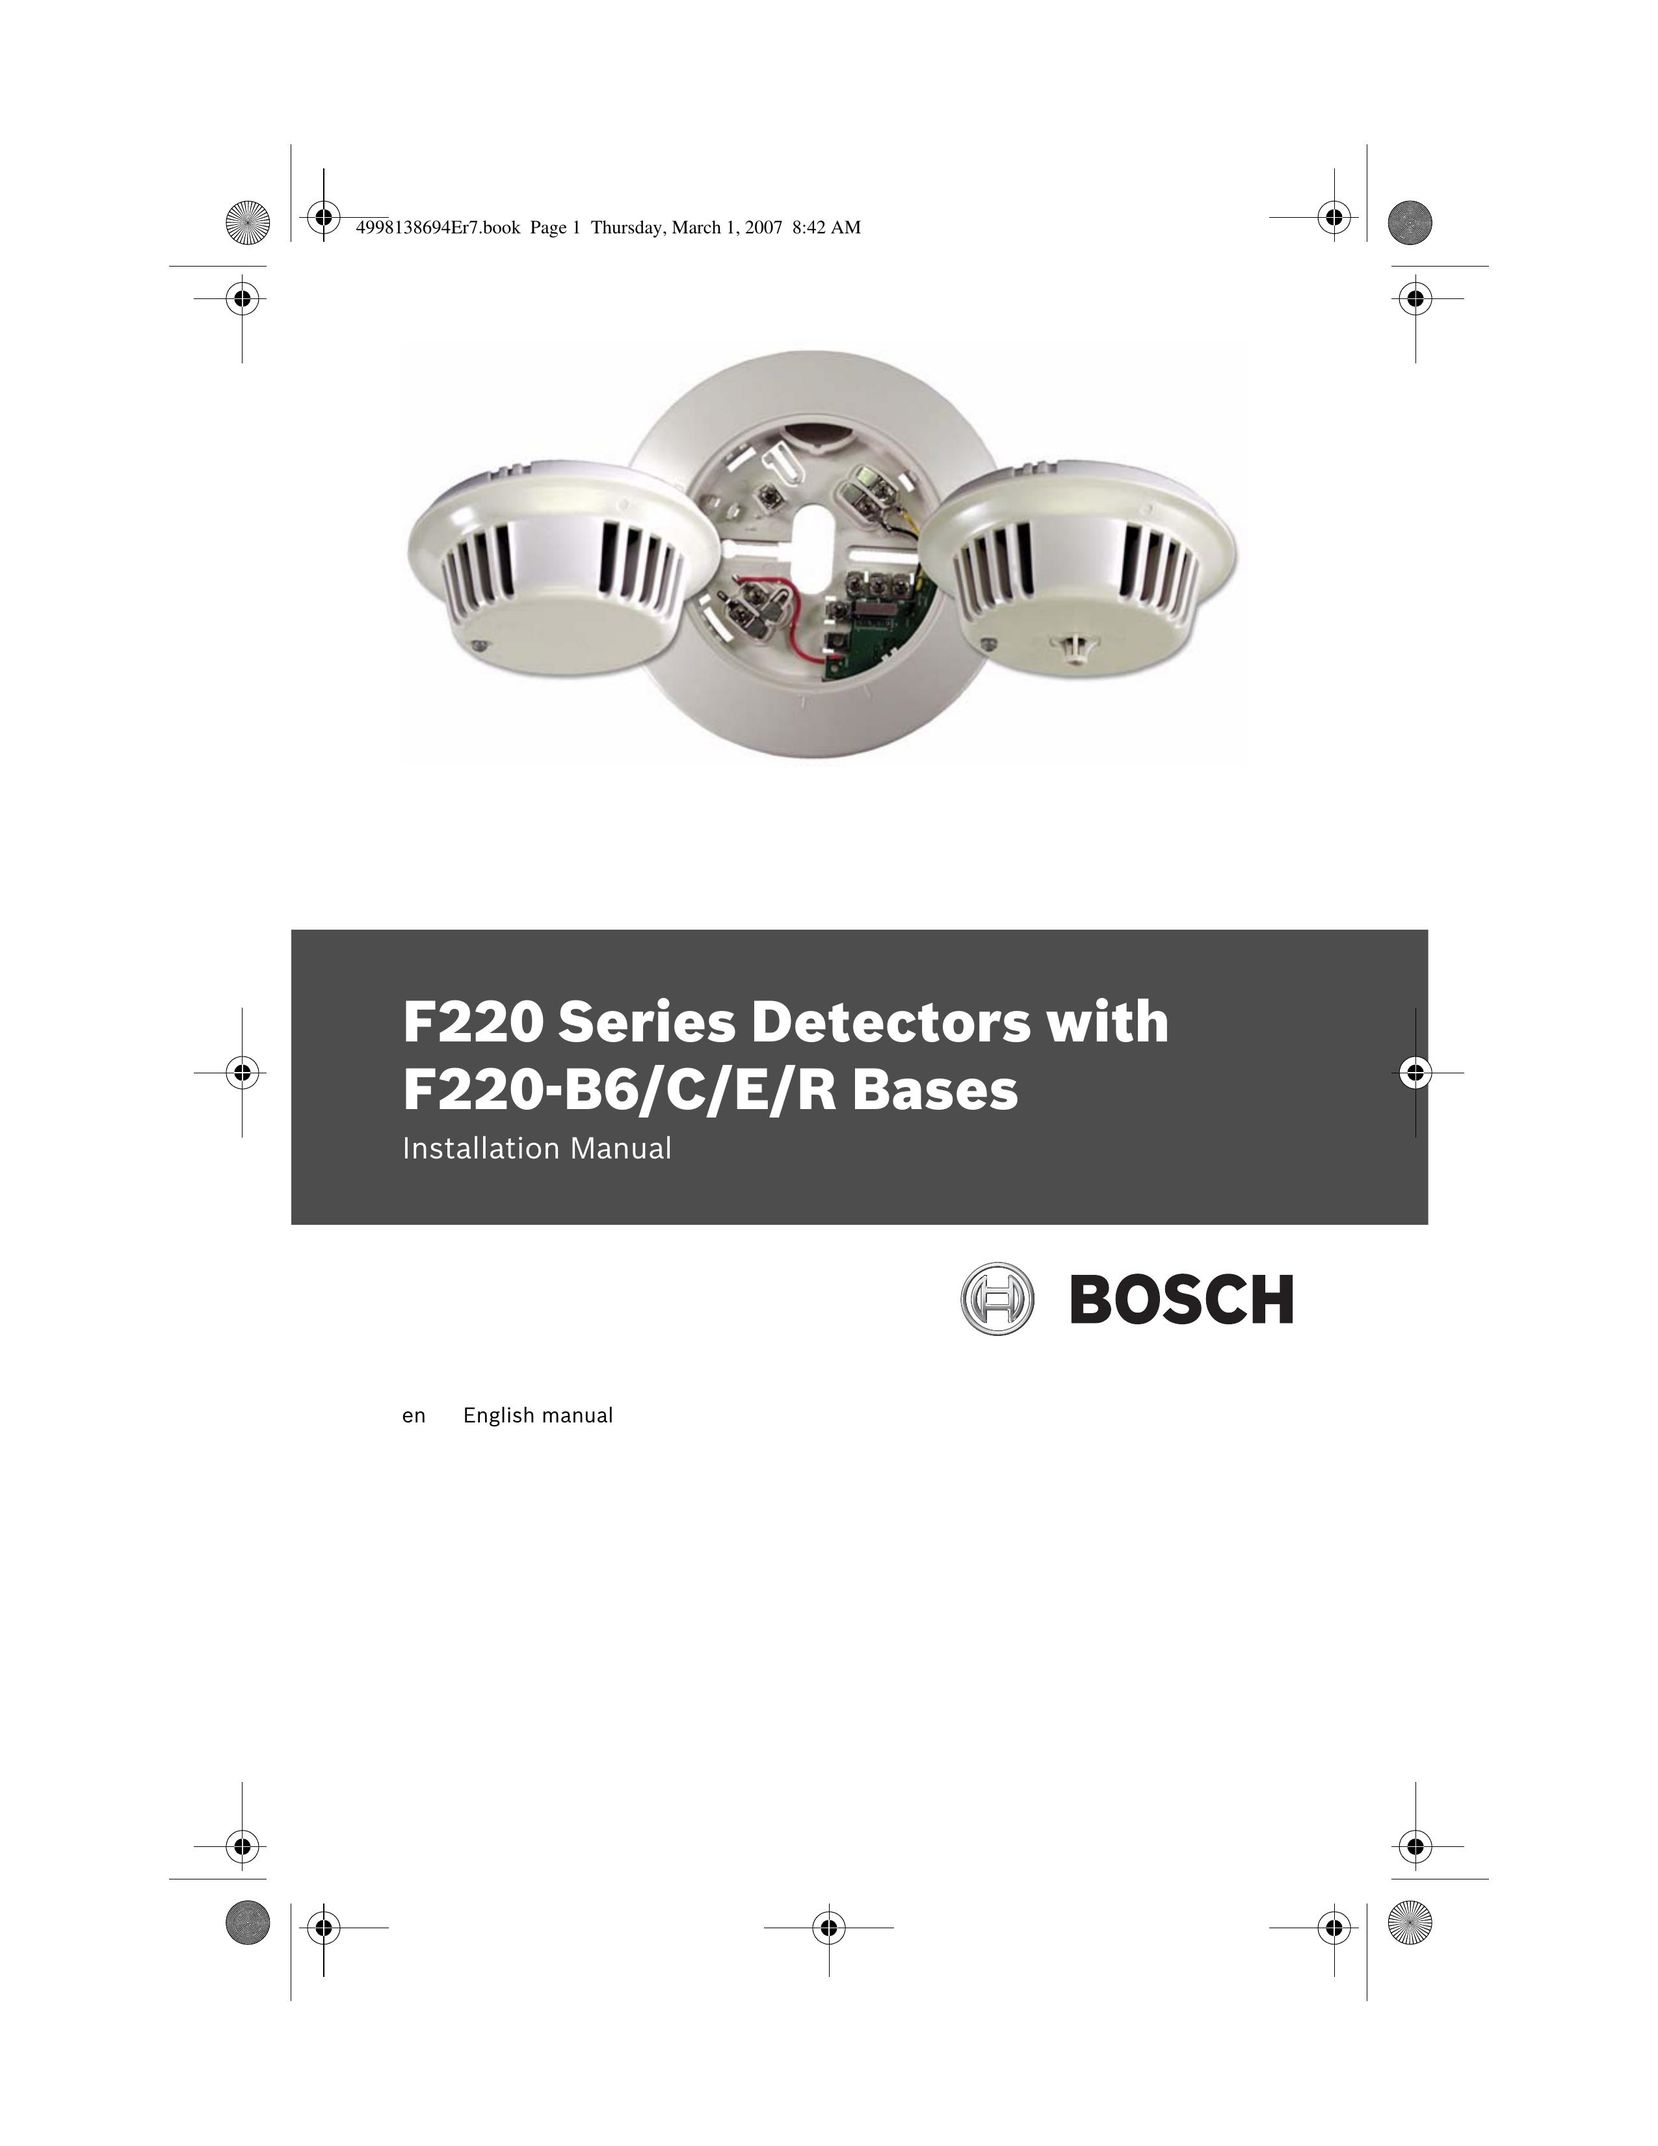 Bosch Appliances F220-B6 Smoke Alarm User Manual